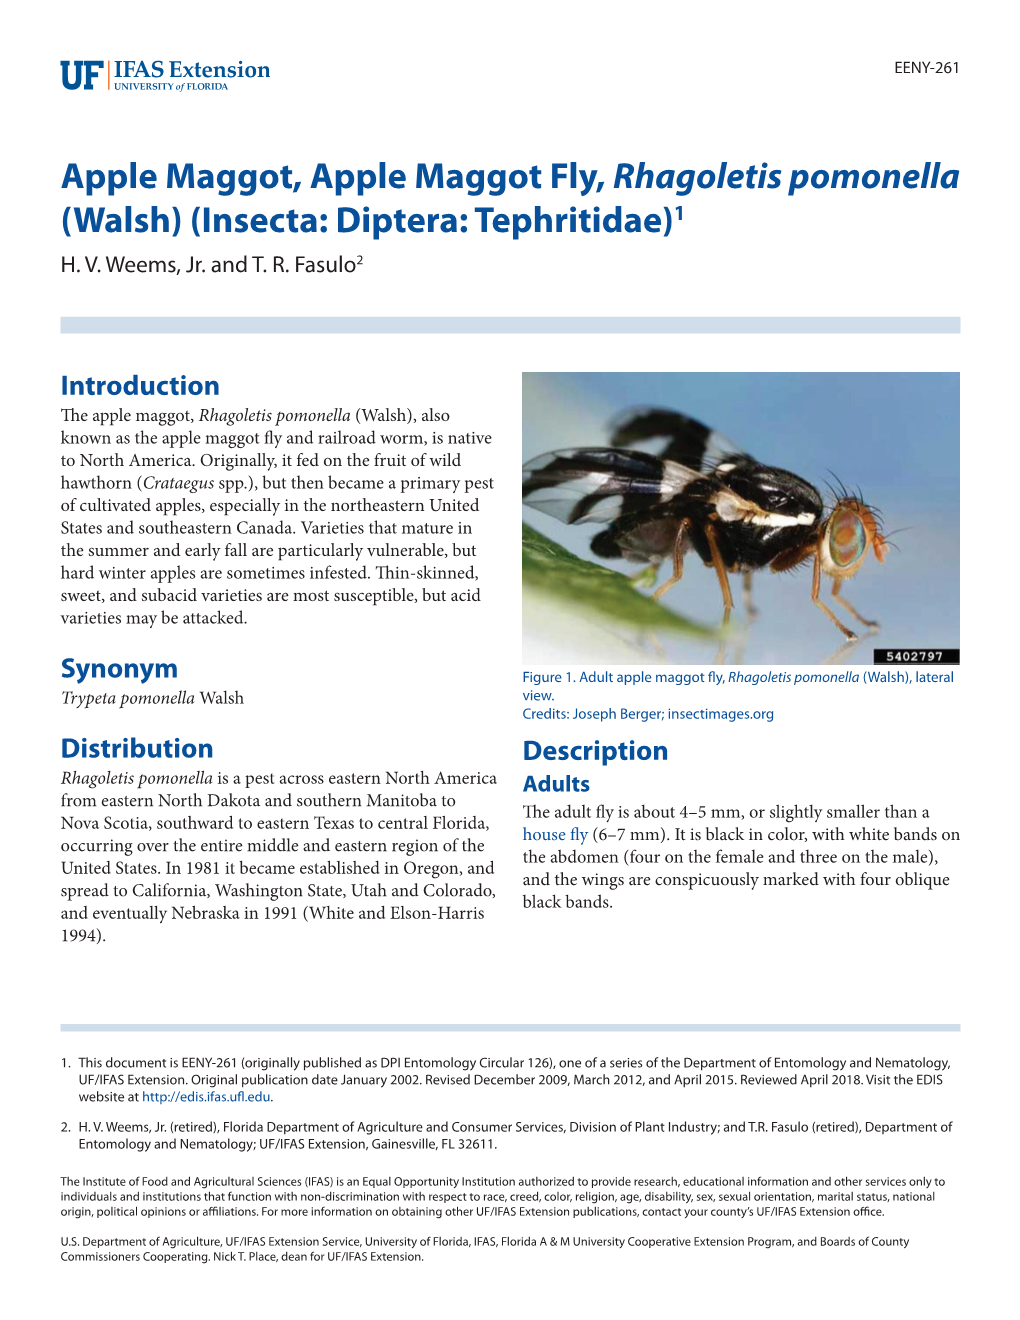 Apple Maggot, Apple Maggot Fly, Rhagoletis Pomonella (Walsh) (Insecta: Diptera: Tephritidae)1 H